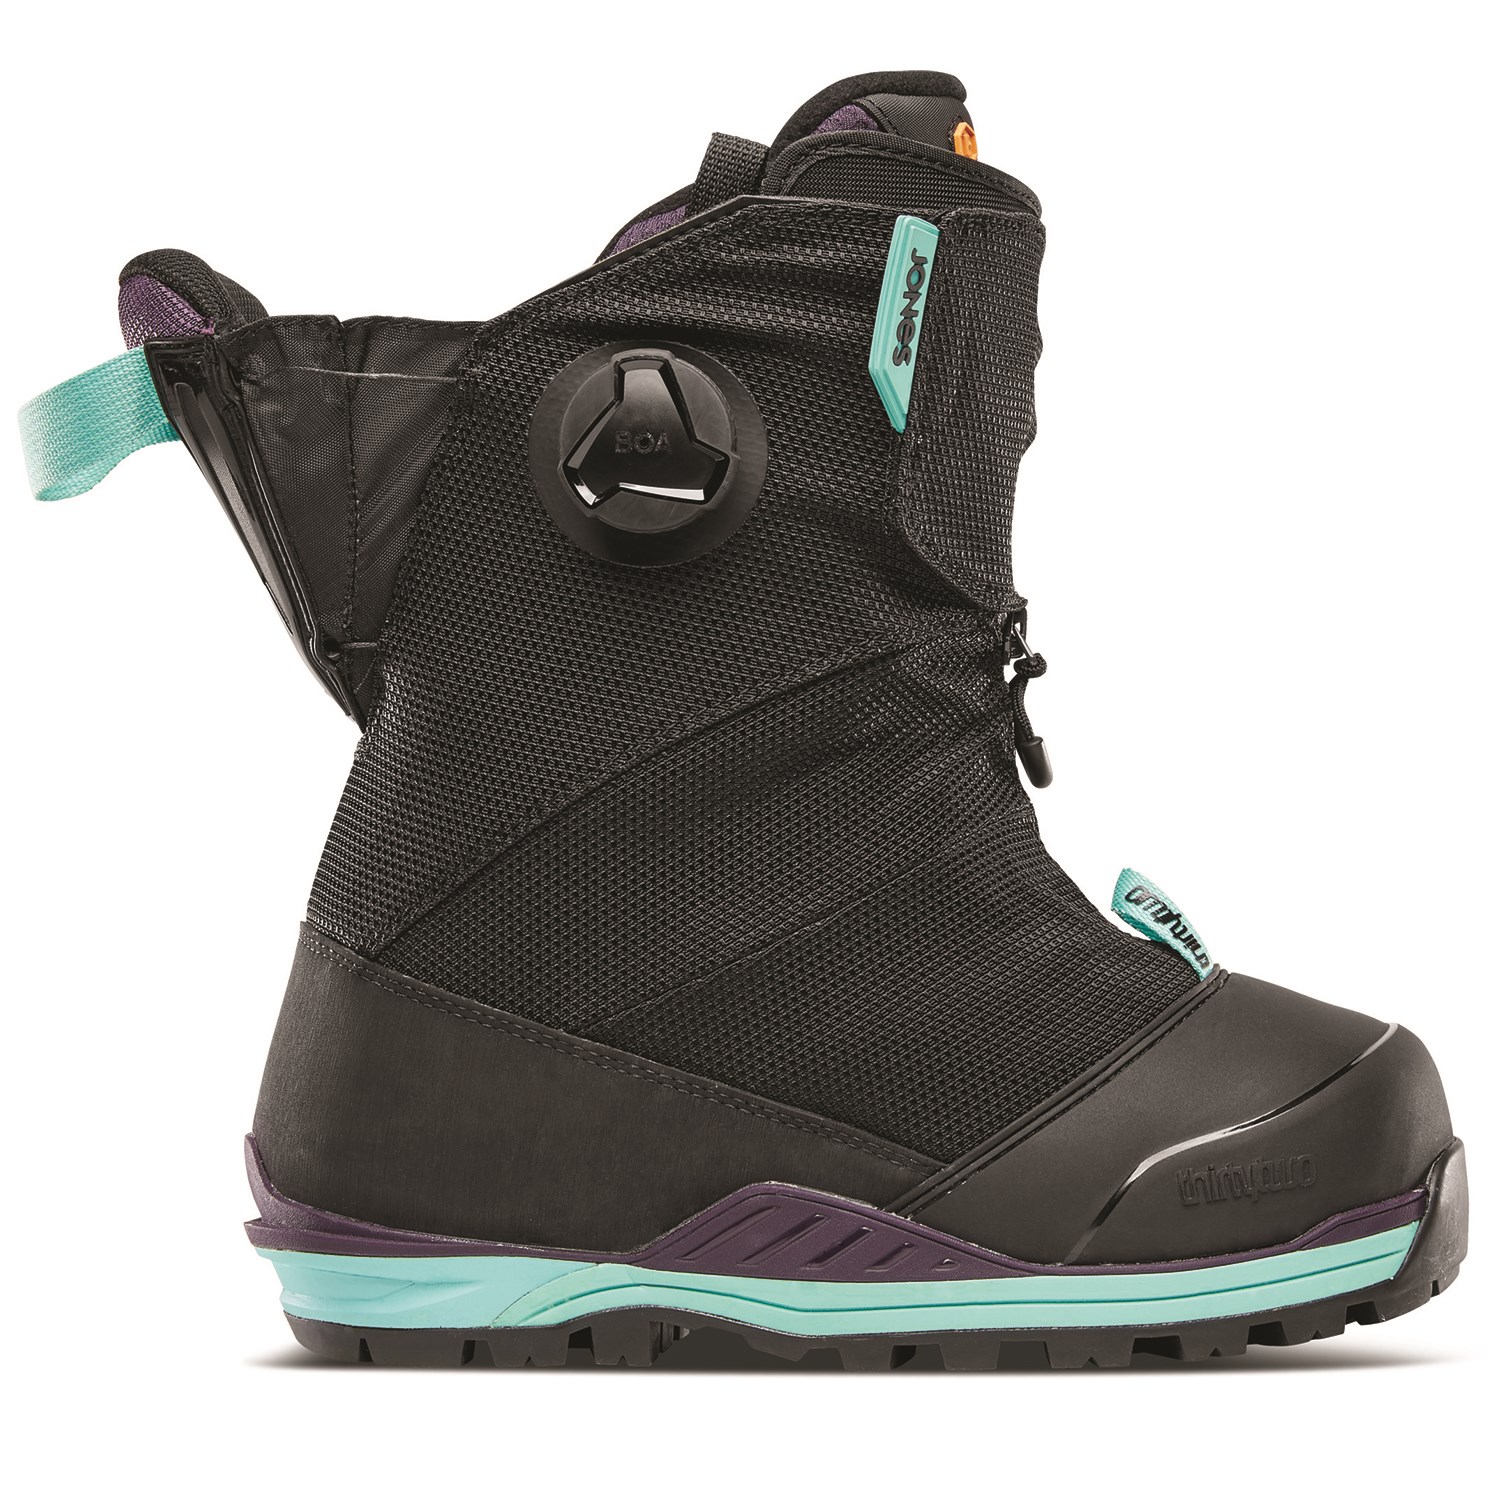 thirtytwo Jones MTB Snowboard Boots - Women's 2020 | evo